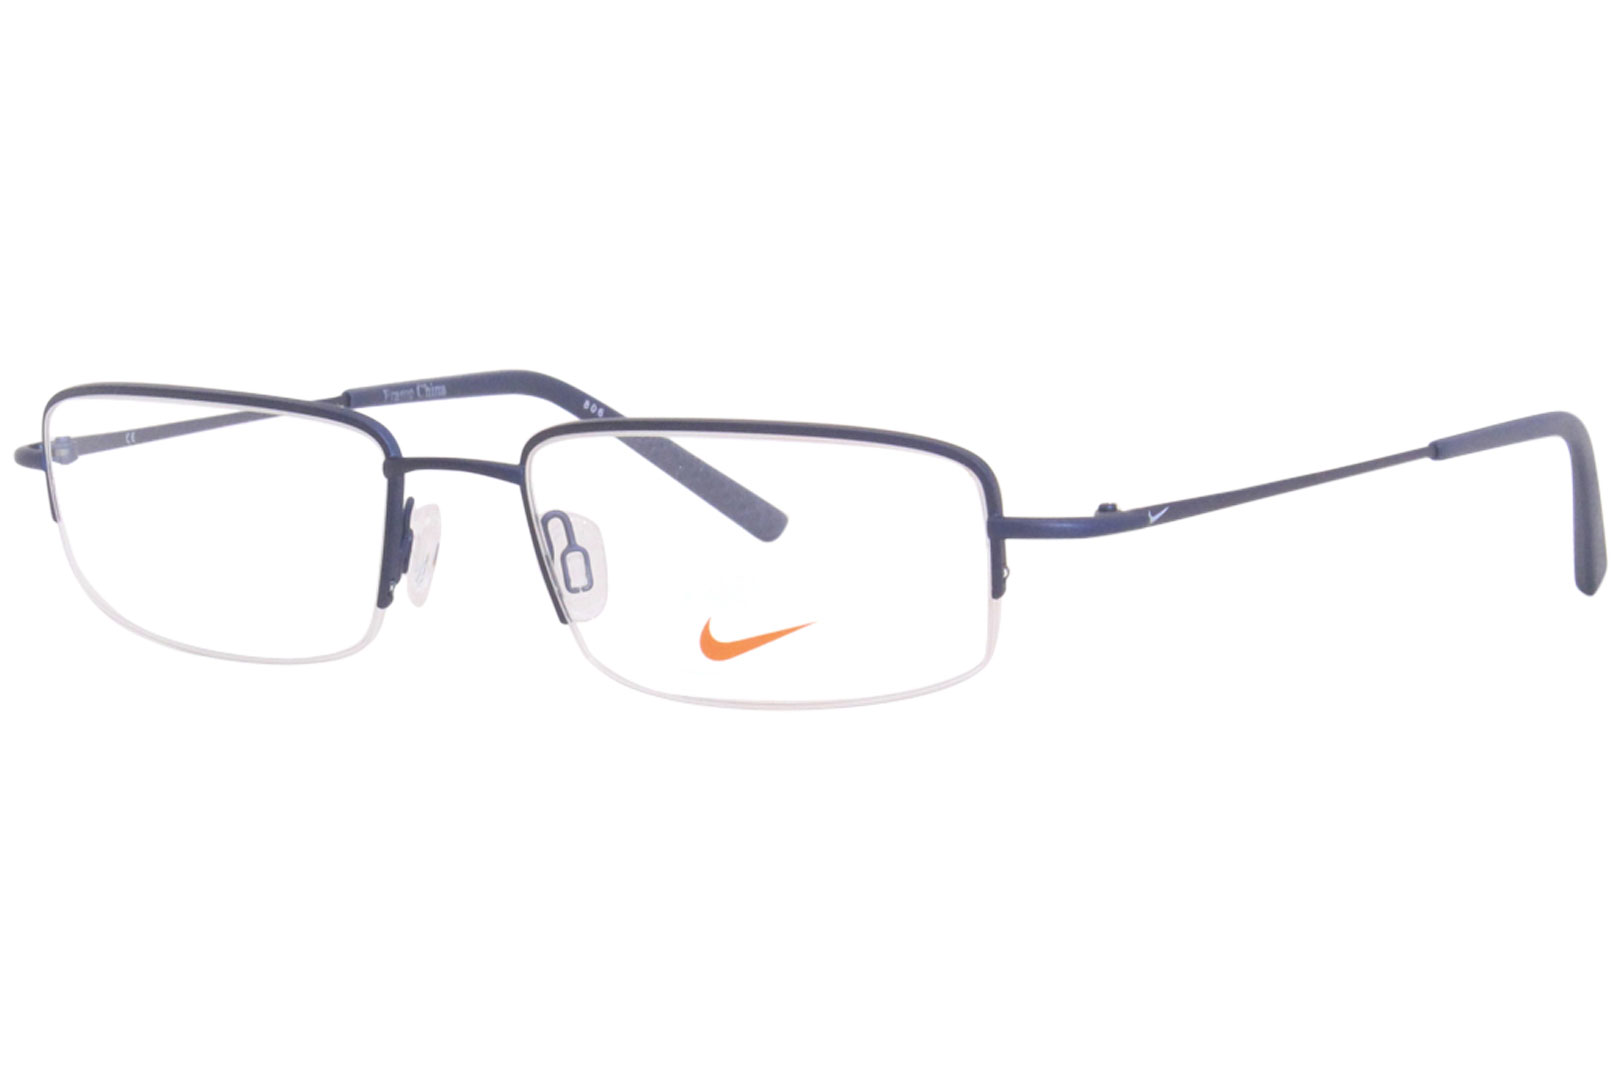 Bezit Blauwe plek Verrassend genoeg Nike Eyeglasses Frame Men's 8179 410 Satin Navy 55-19-140 | EyeSpecs.com